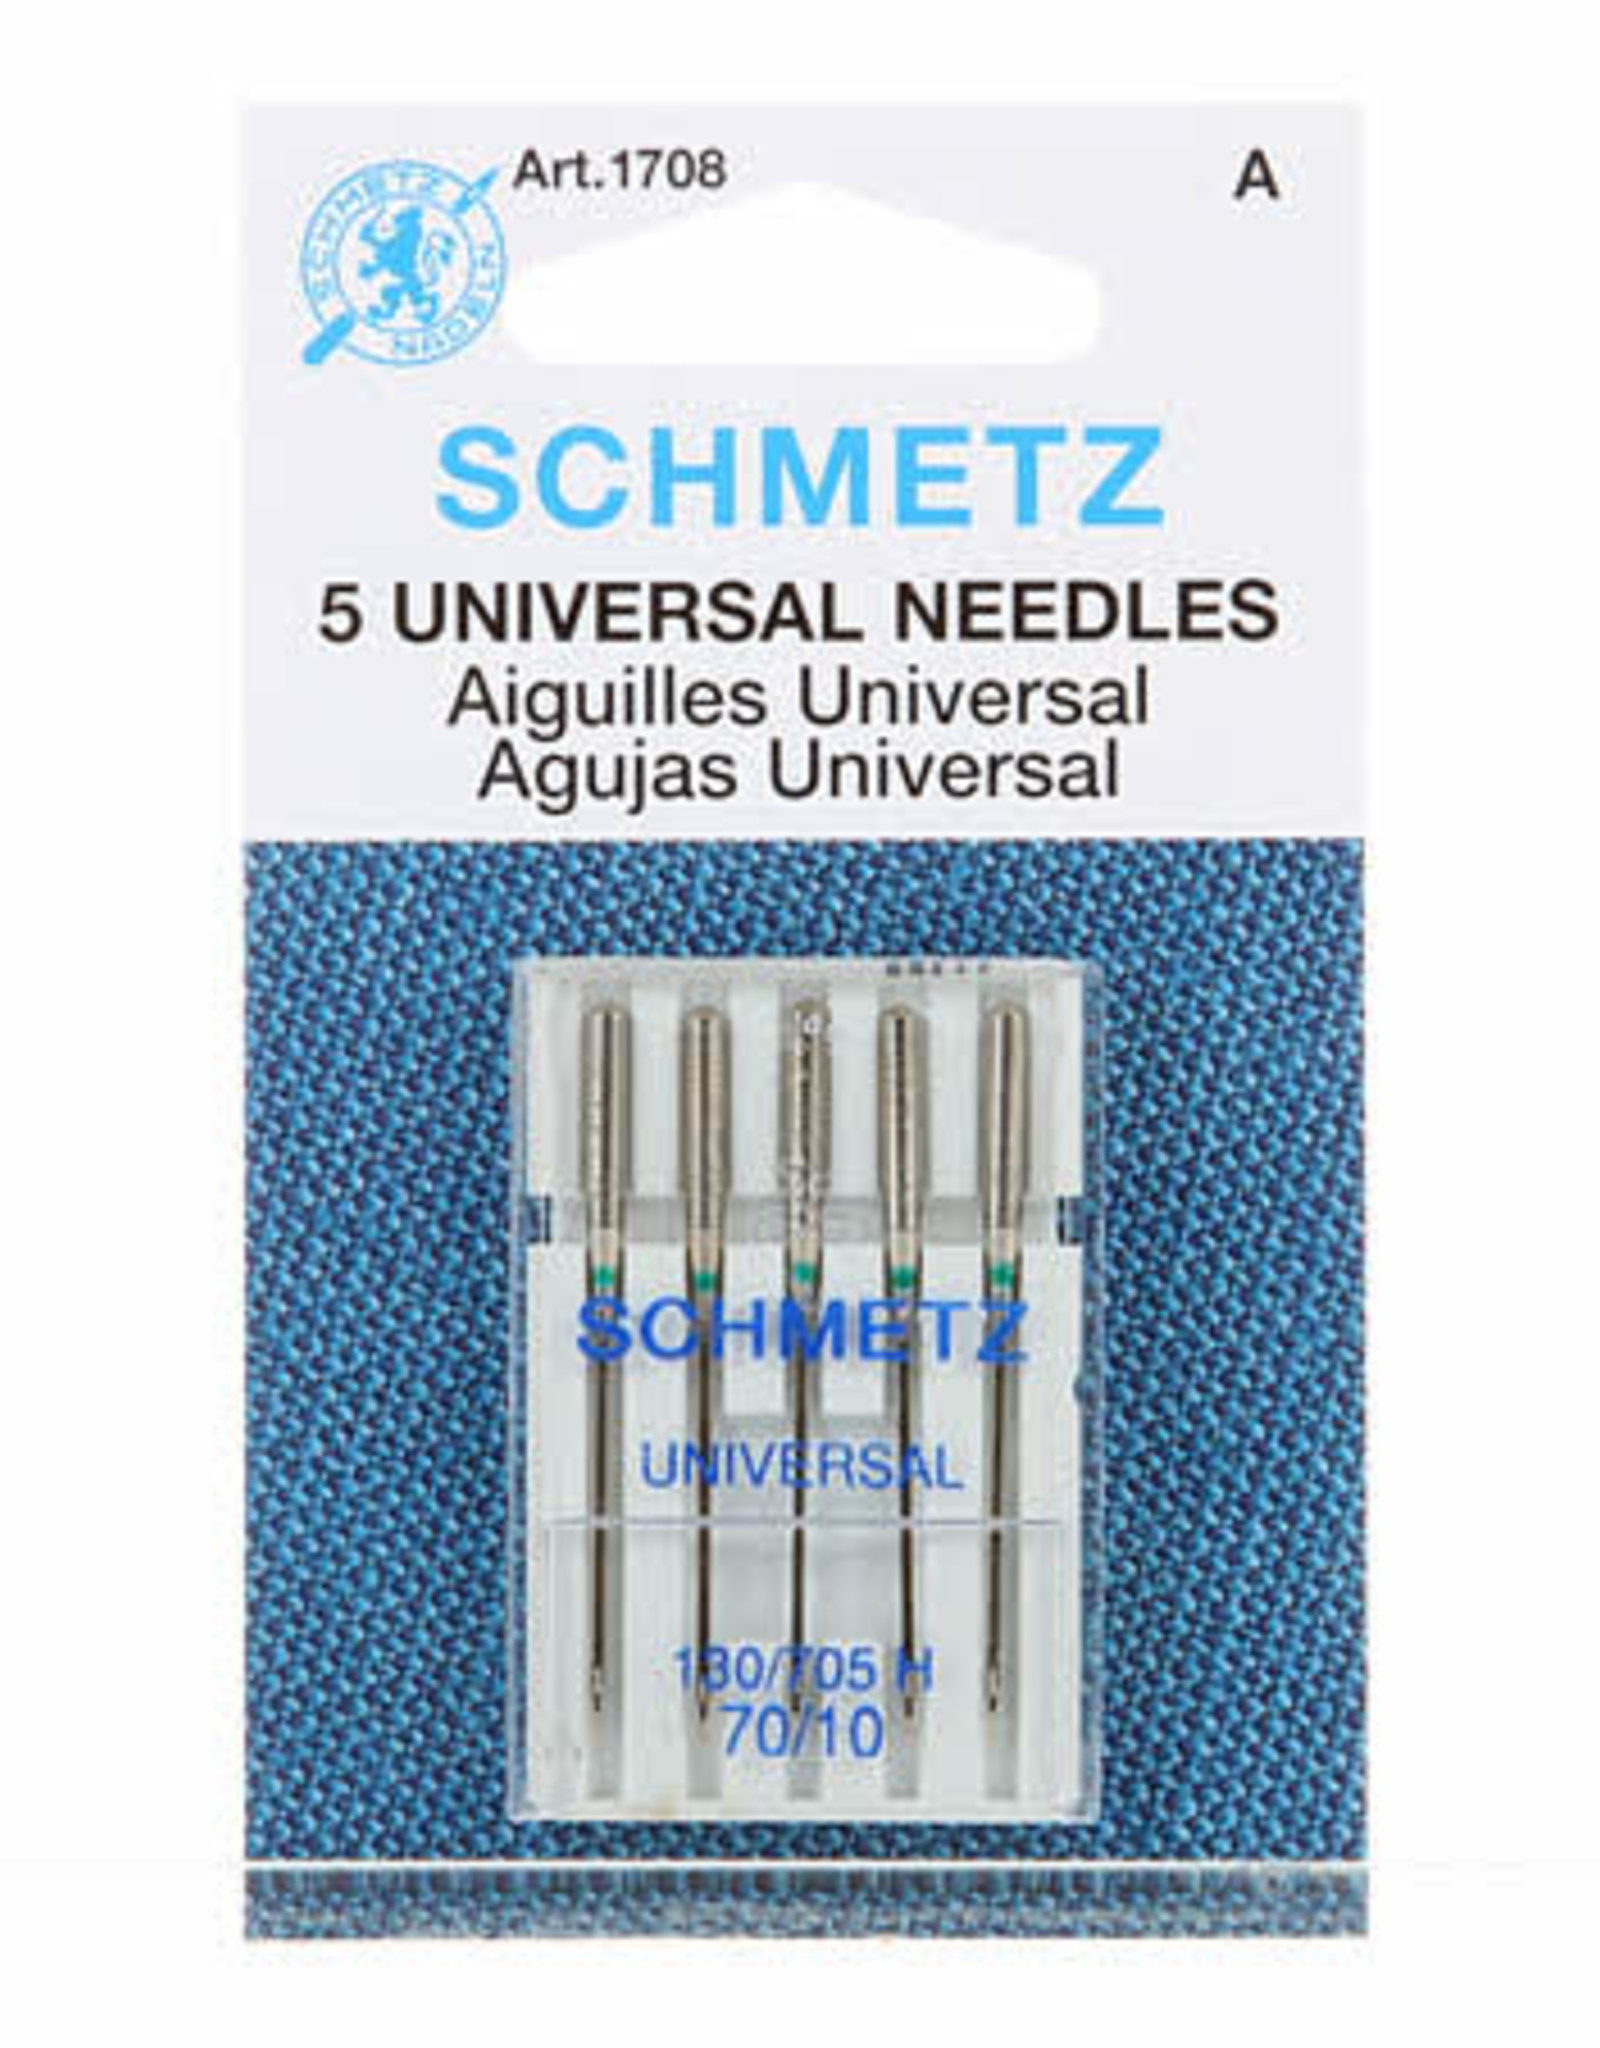 Schmetz Universal needles 10/70